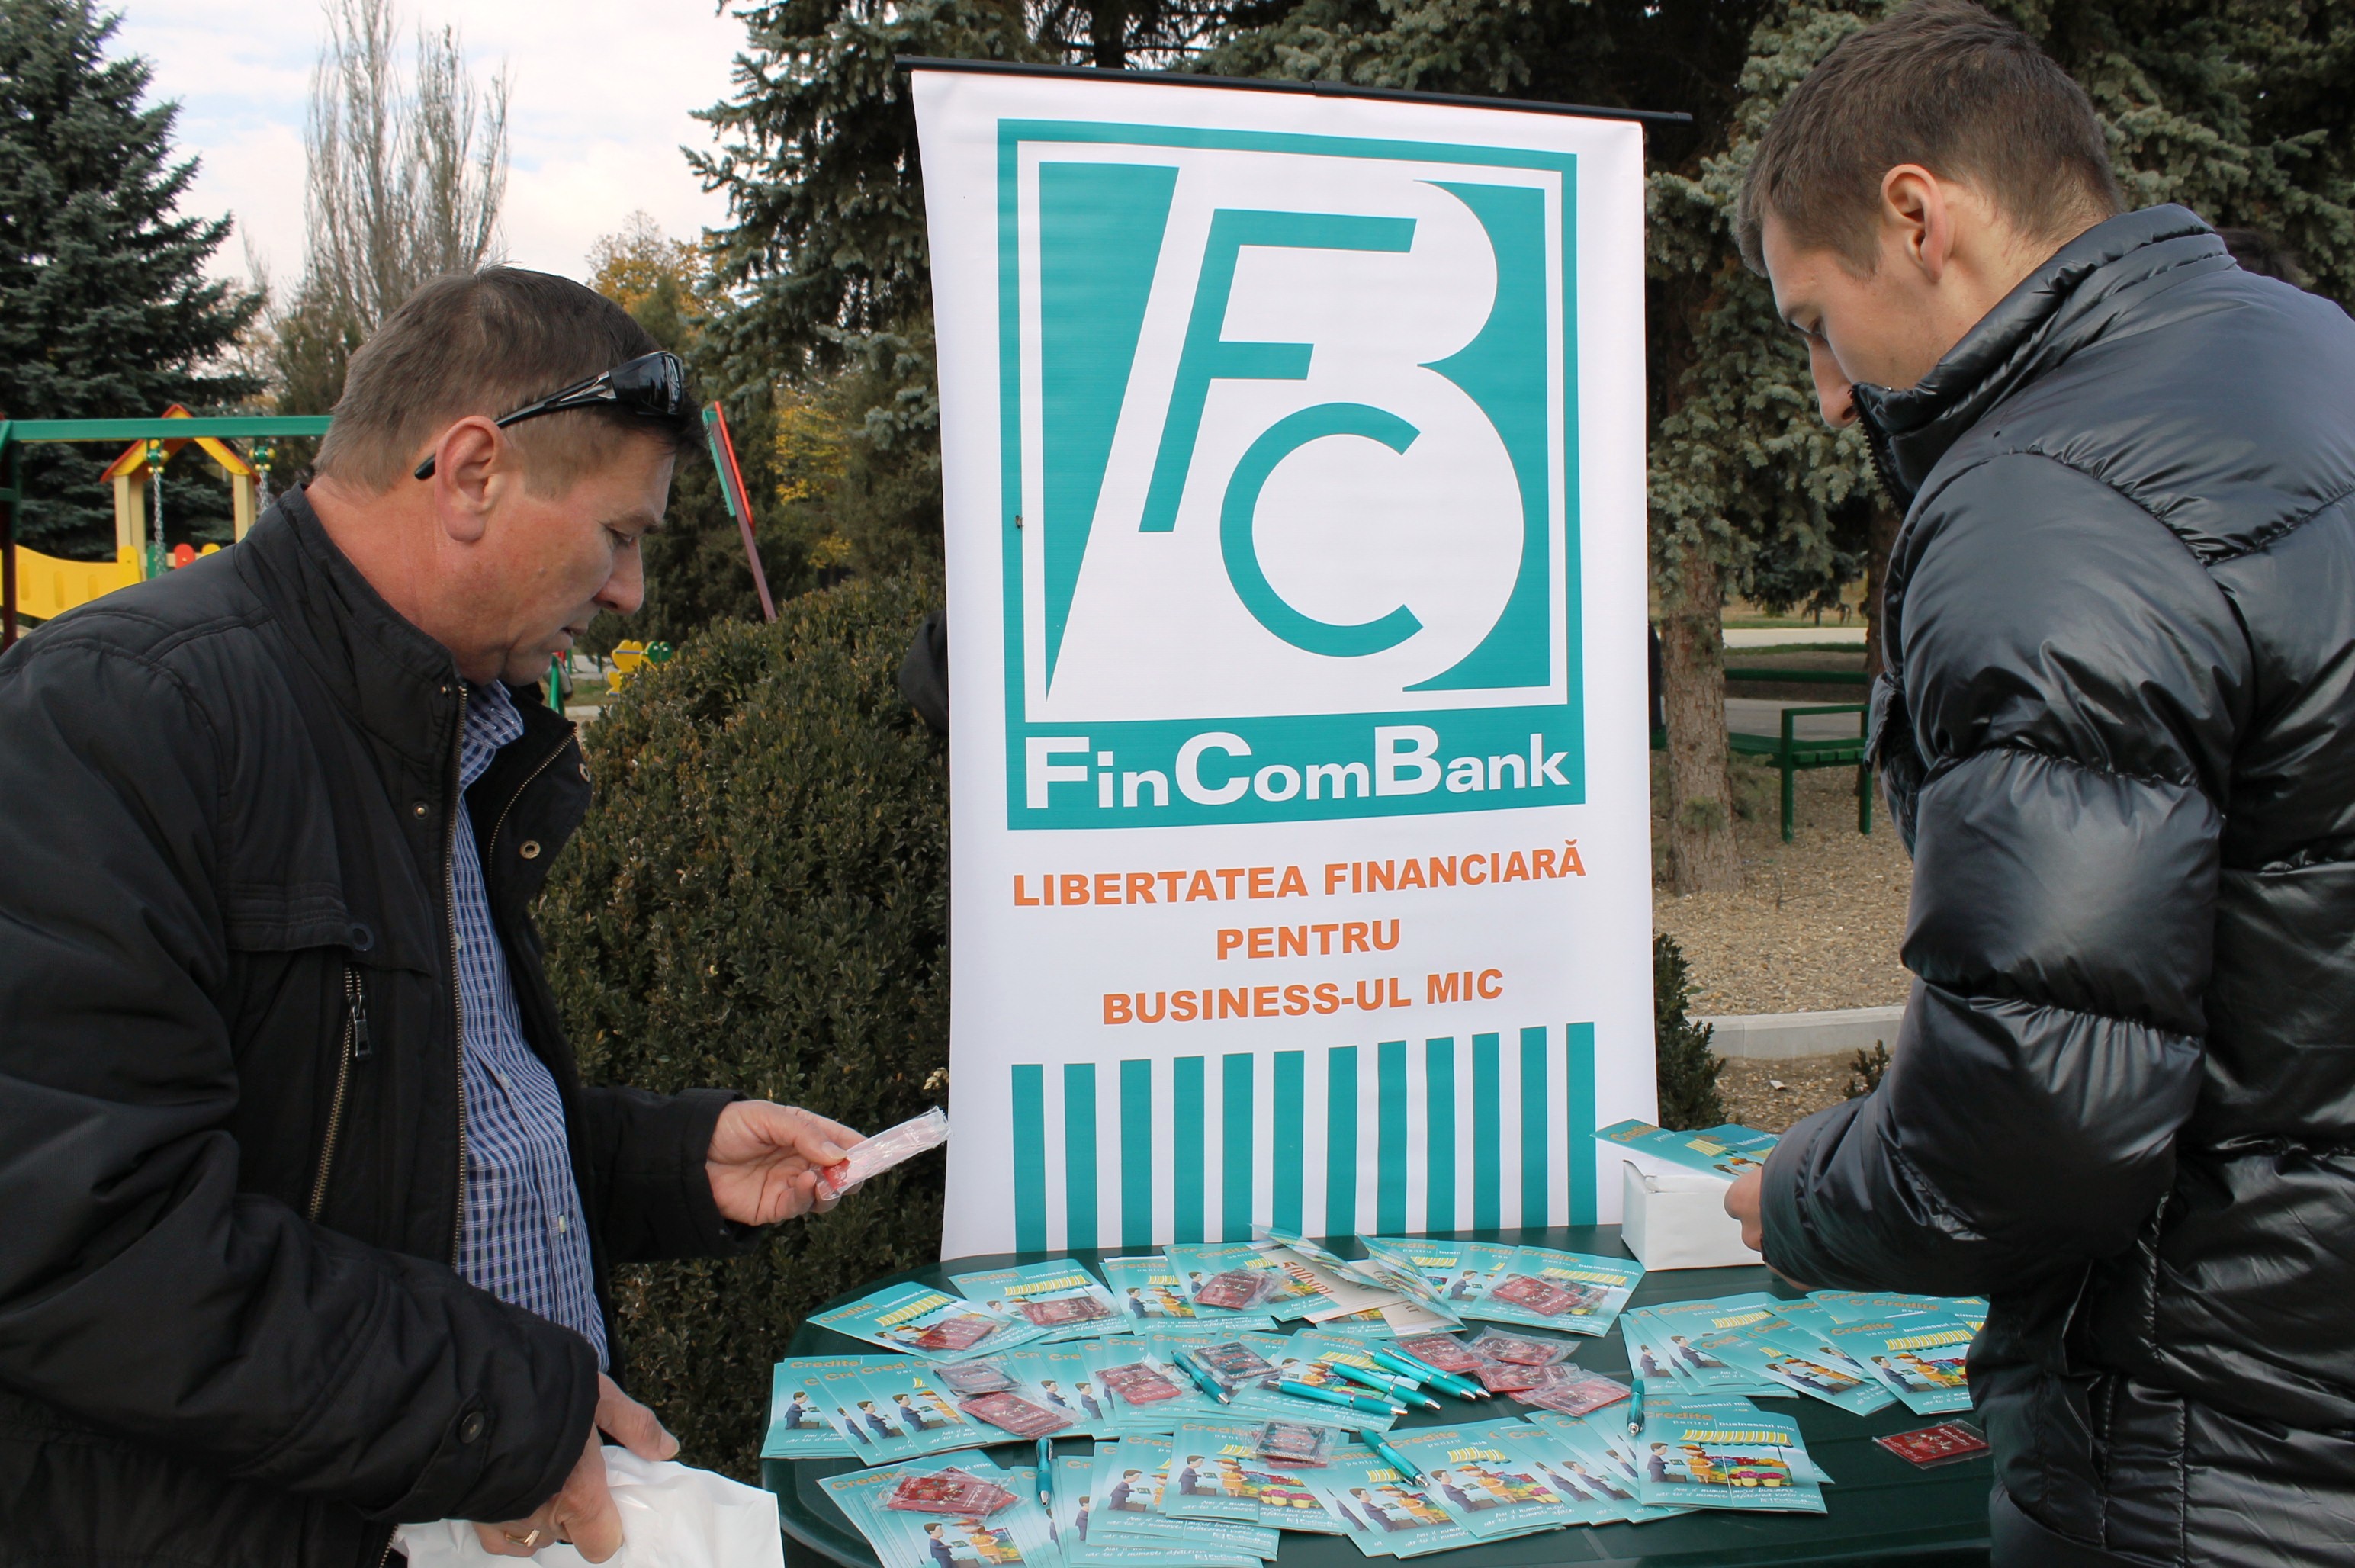 Fincombank isi promoveaza produsele